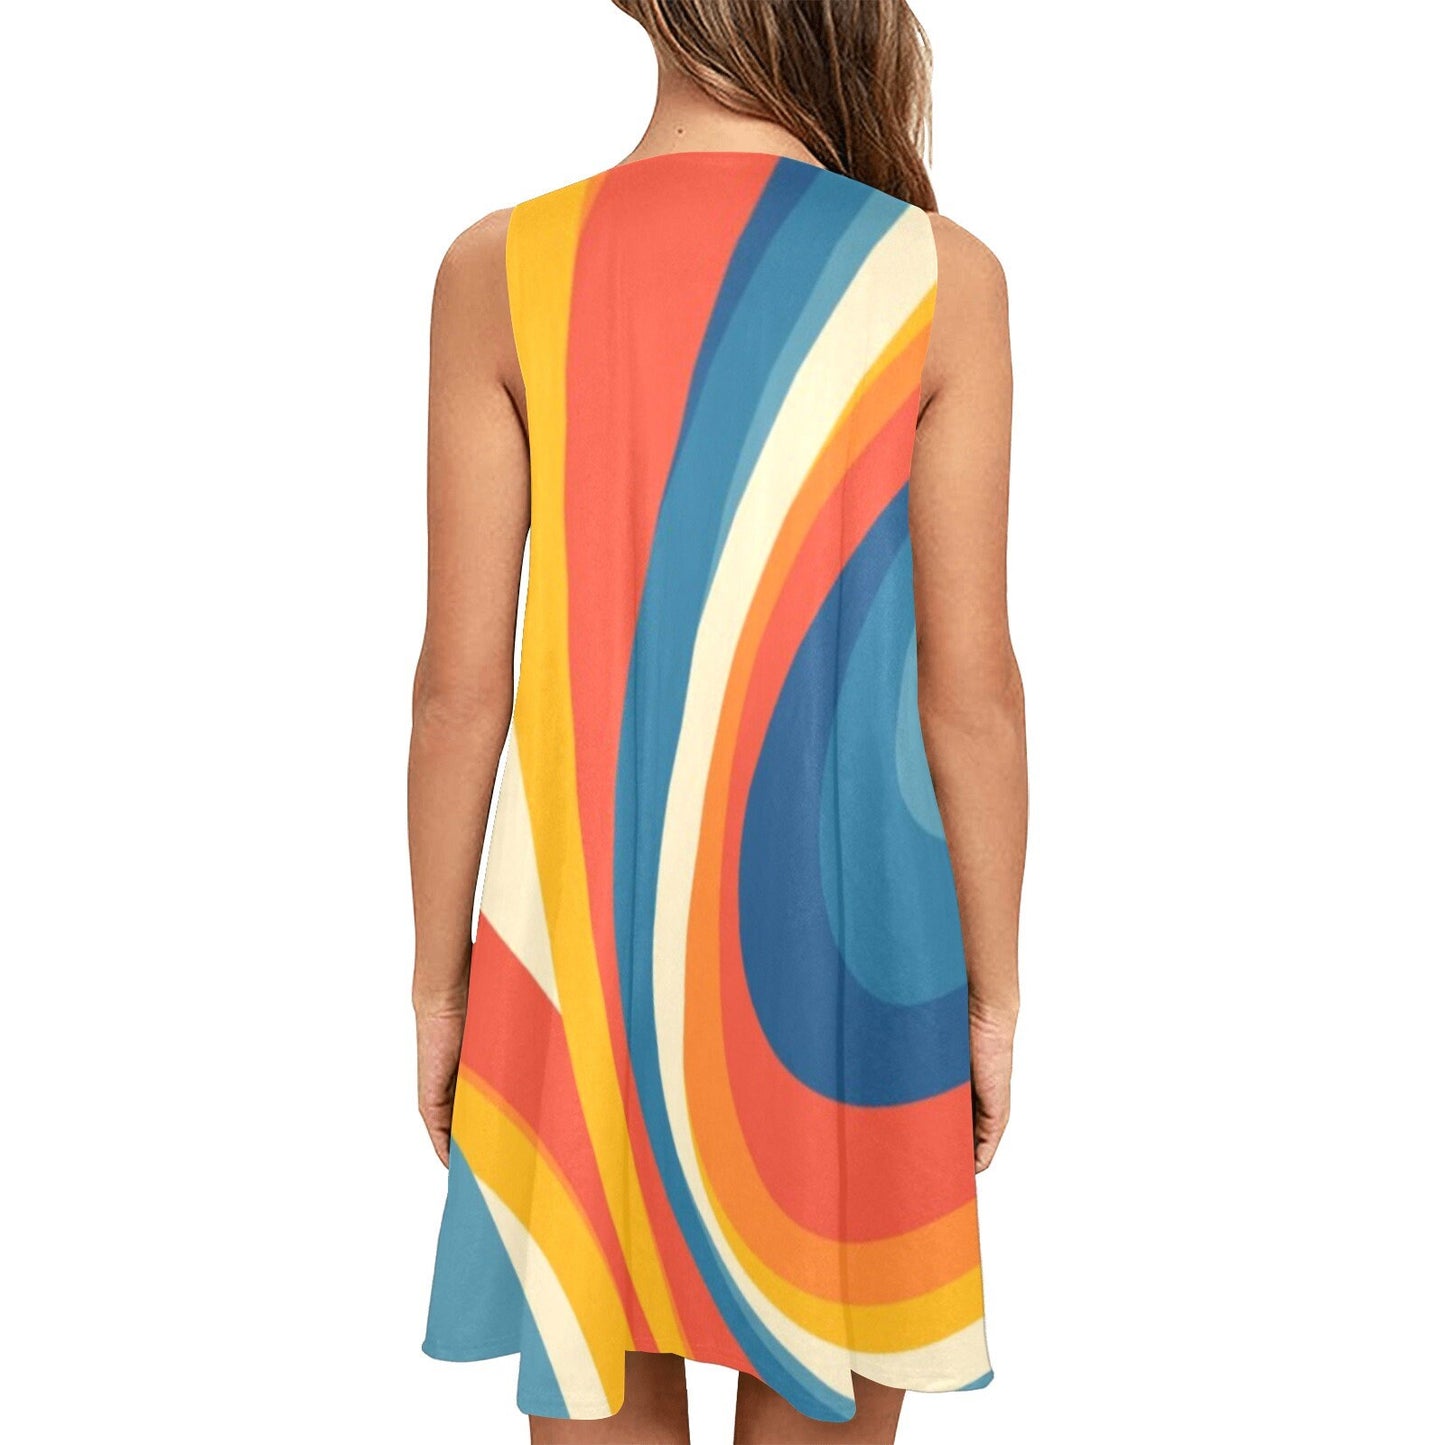 Vintage-Kleiderstil, Groovy-Kleid im 70er-Jahre-Stil, Hippie-Kleid, Retro-Kleid, Zeltkleid, 70er-Jahre-inspiriertes Kleid, Kleid im Vintage-Stil, Blau-Orange-Kleid